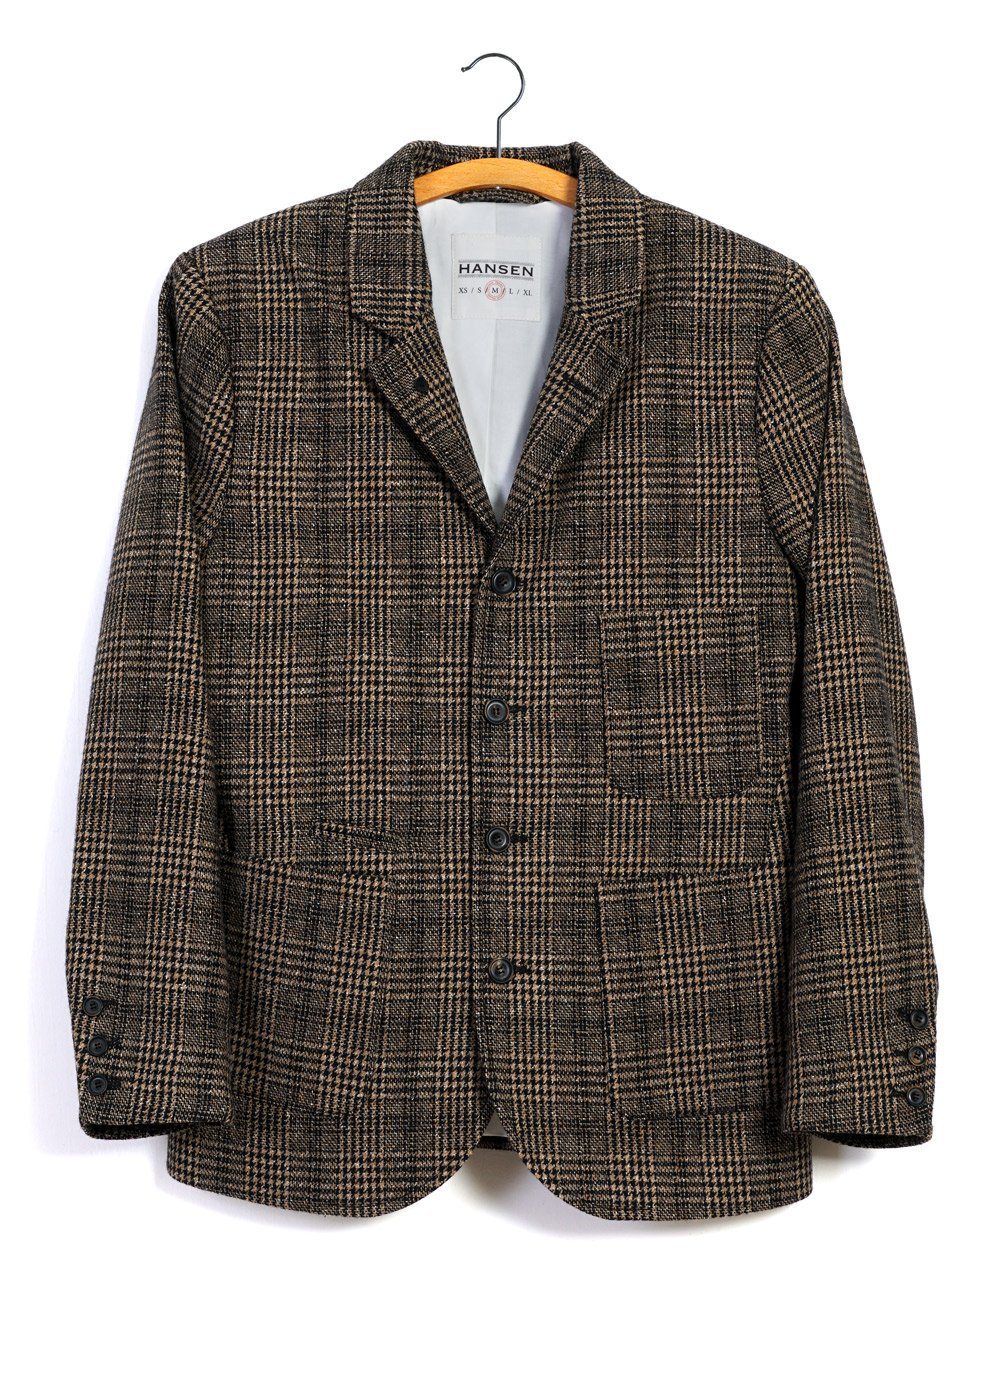 HANSEN Garments - ANKER | Four Button Classic Blazer | Checkered - HANSEN Garments